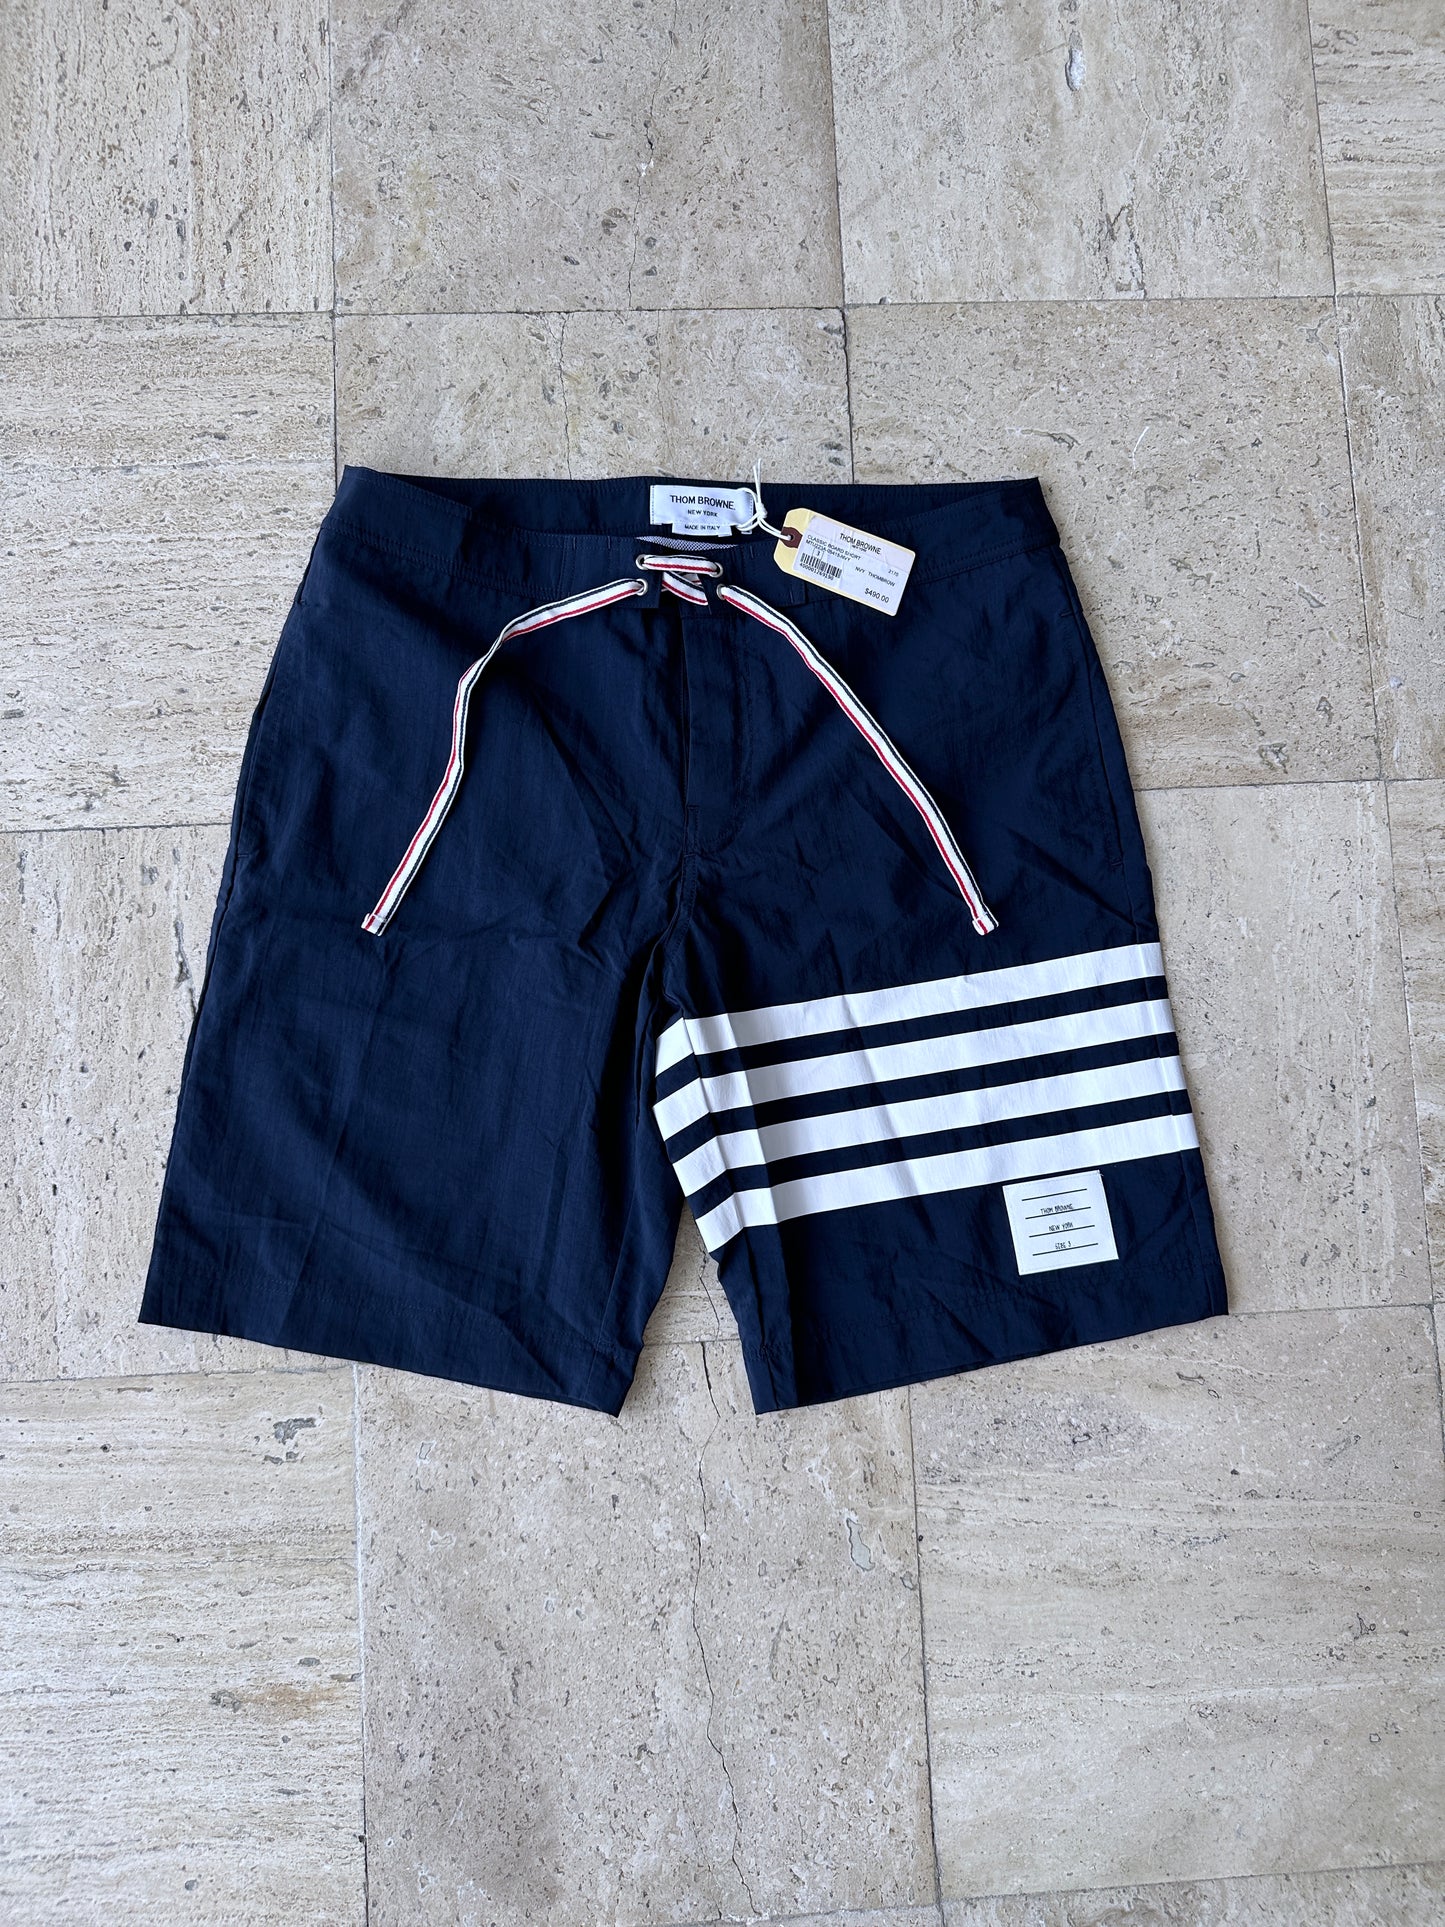 Thom Browne - Navy Logo Patch Swim Shorts